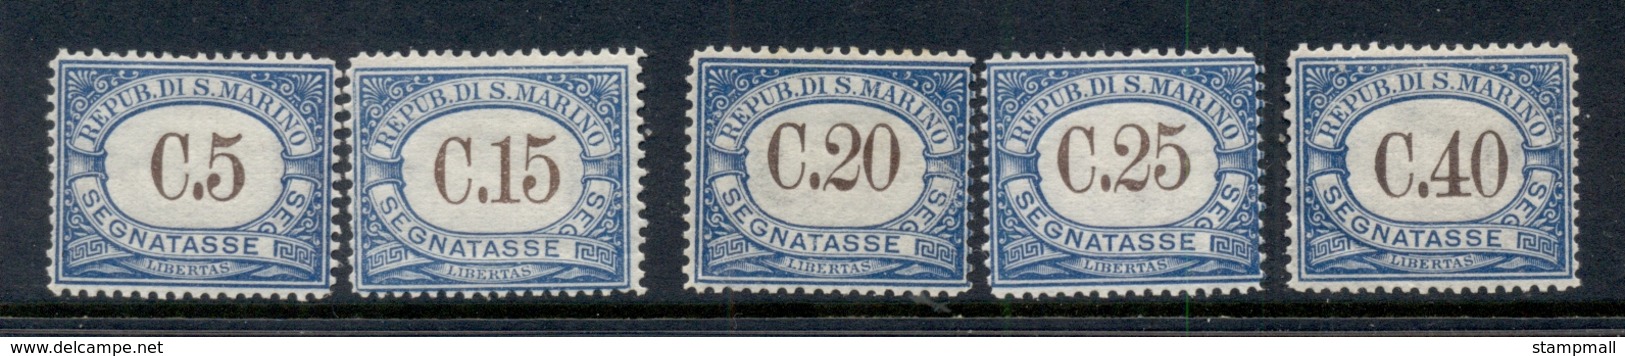 San Marino 1925-29 Postage Dues Asst MLH - Unused Stamps